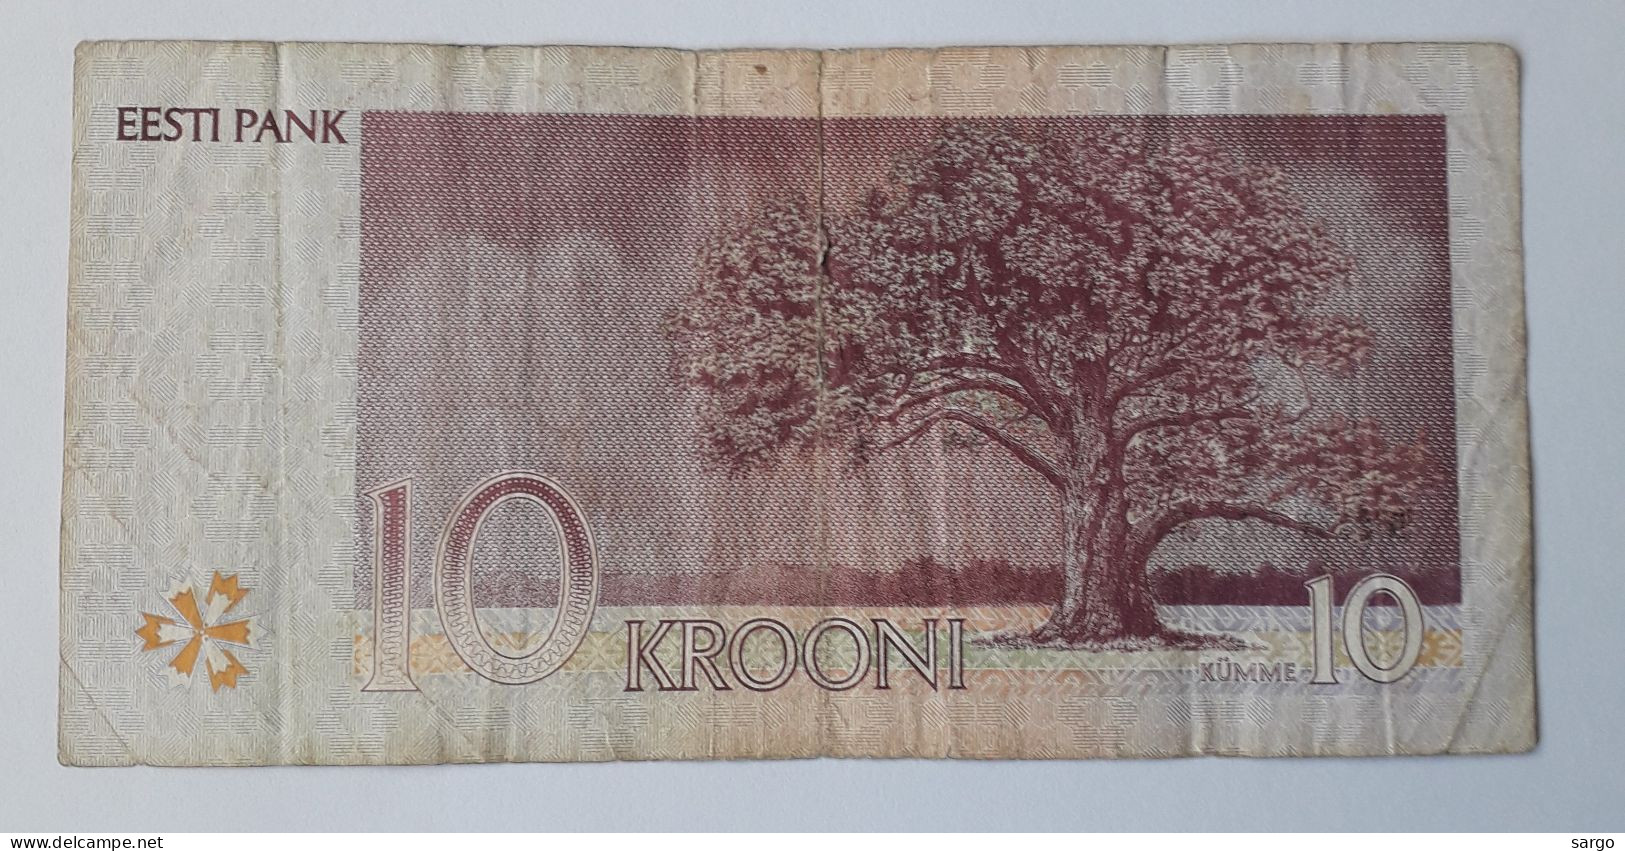 ESTONIA - 10 KROONI -  P 72 - 1991-1992 -  CIRC - BANKNOTES - PAPER MONEY - CARTAMONETA - - Estland